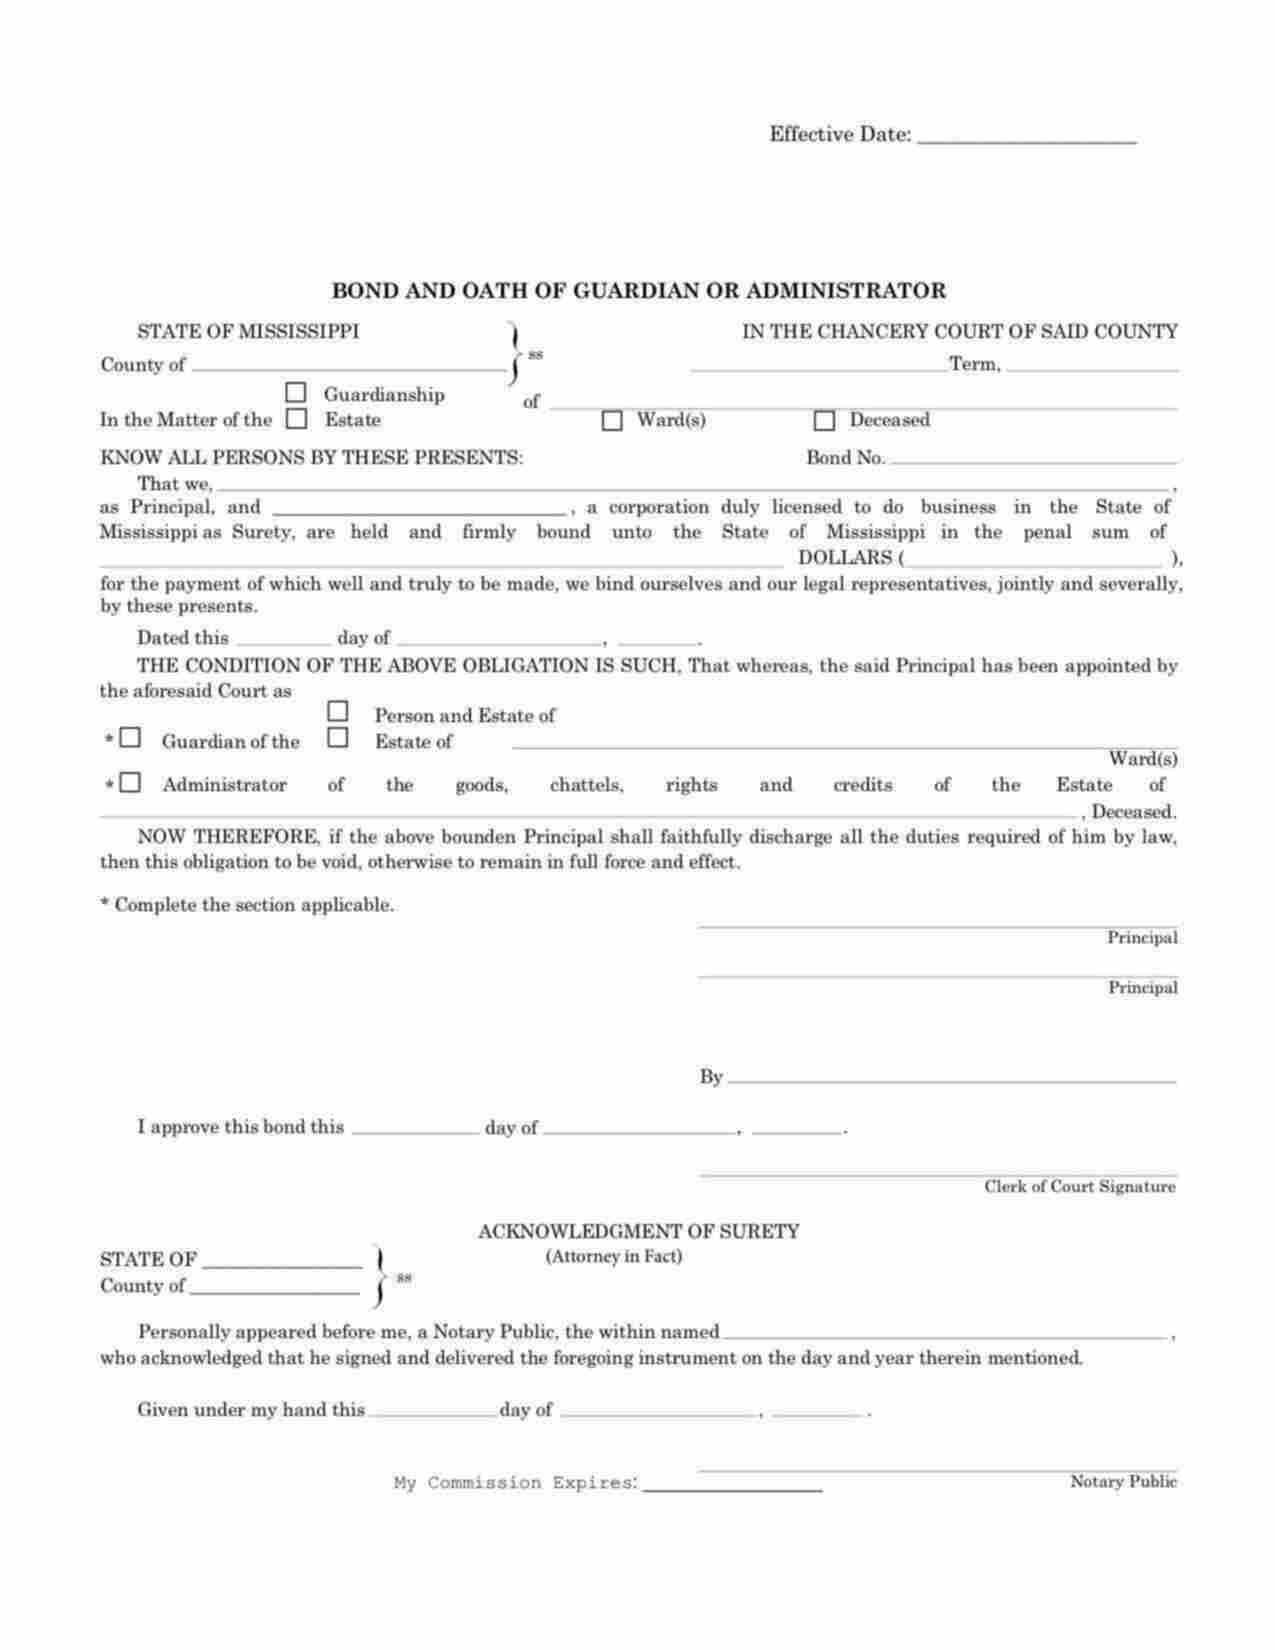 Mississippi Administrator/Executor Bond Form